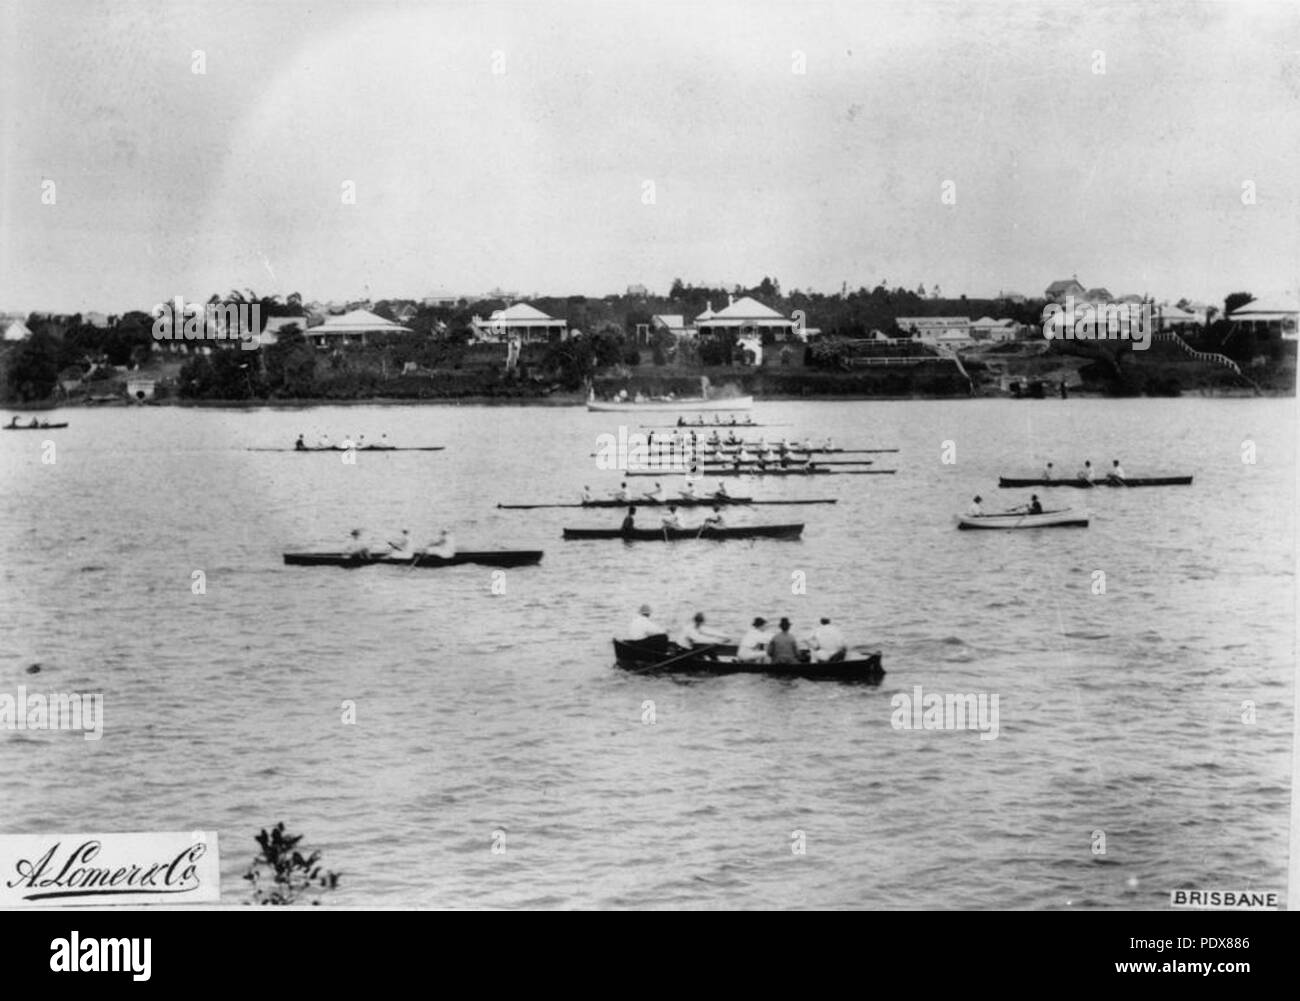 269 1 53304 StateLibQld regata en el río Brisbane, CA. 1889 Foto de stock